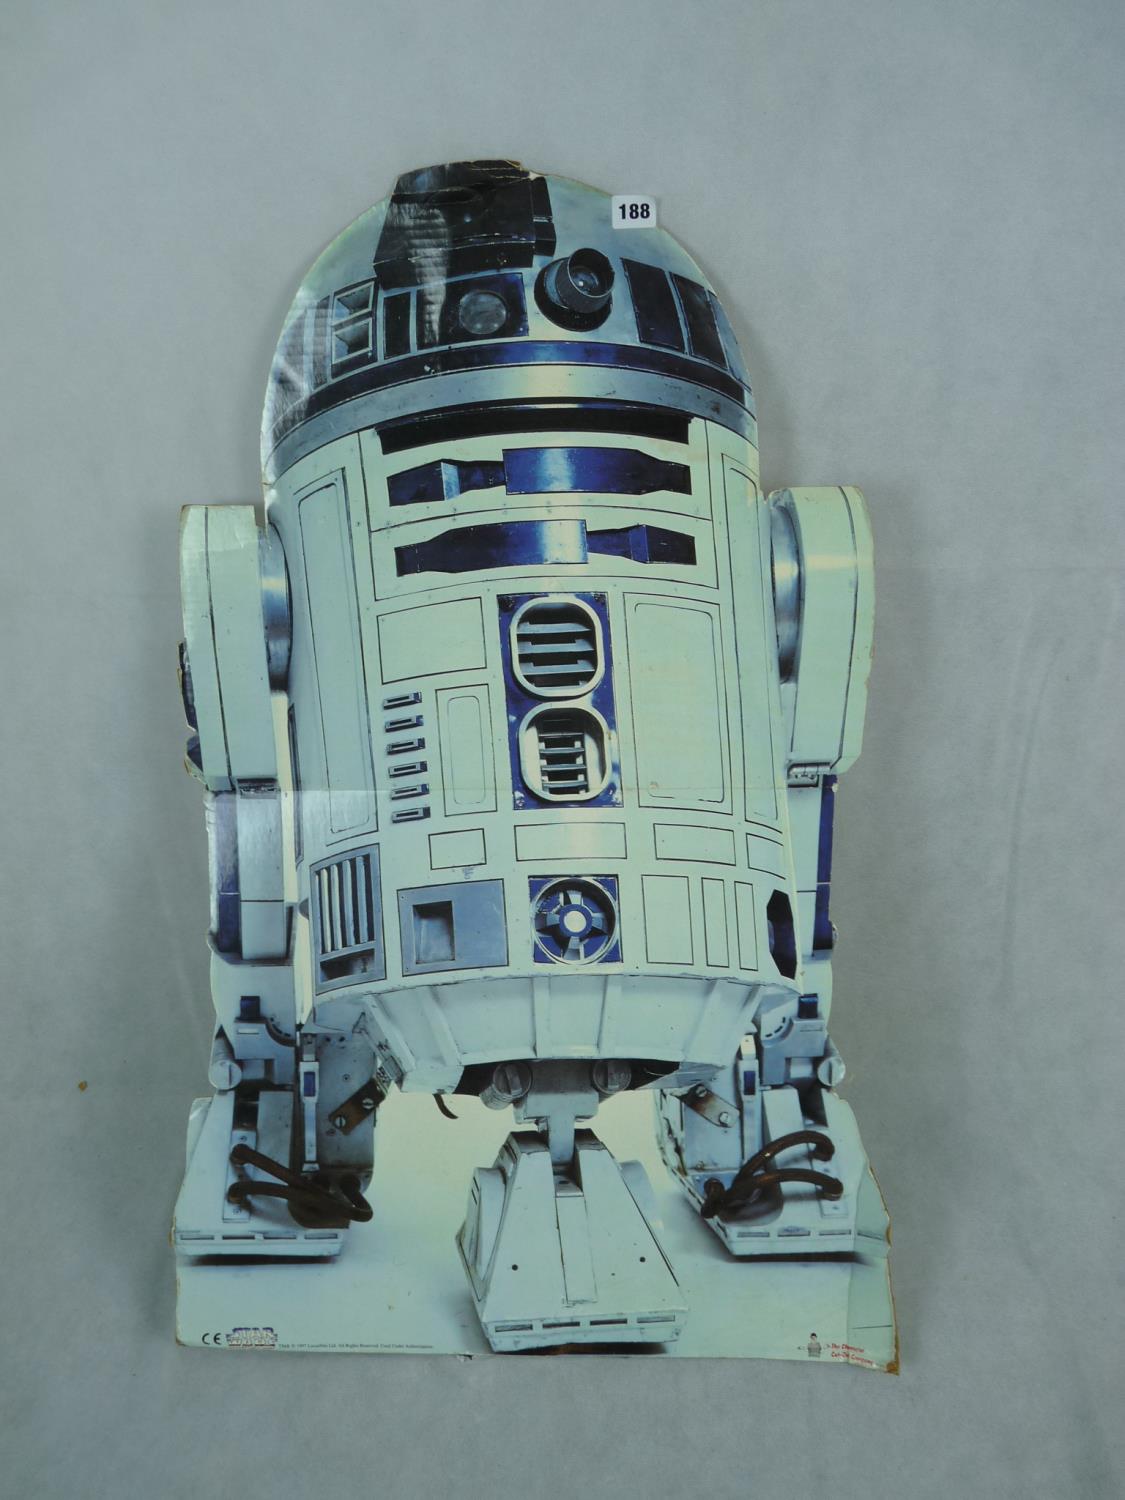 Original Star Wars R2-D2 Cardboard Cut Out Shop Display